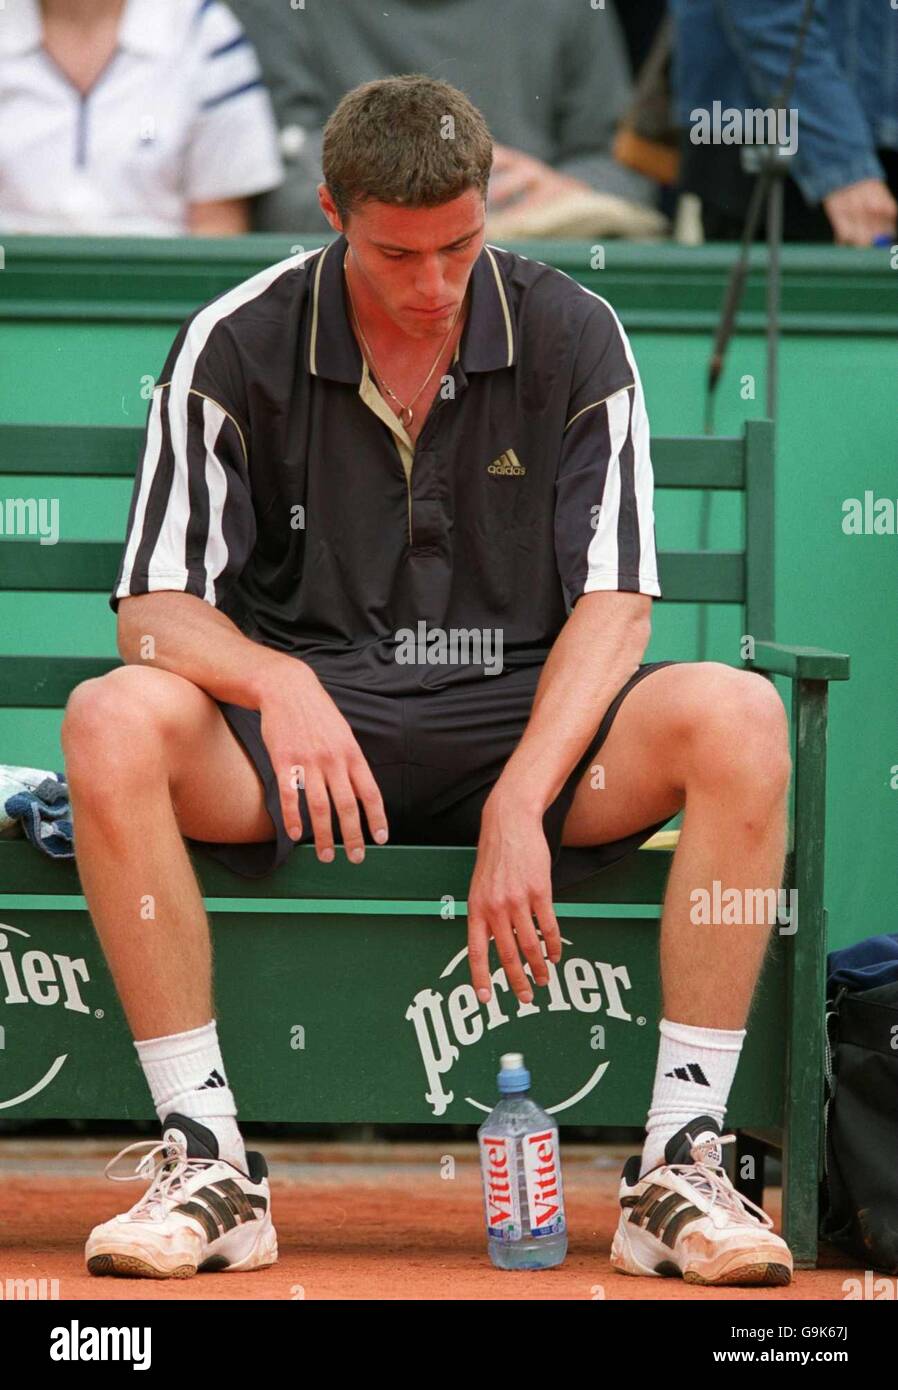 Tennis - French Open Roland Garros 2000 Stock Photo